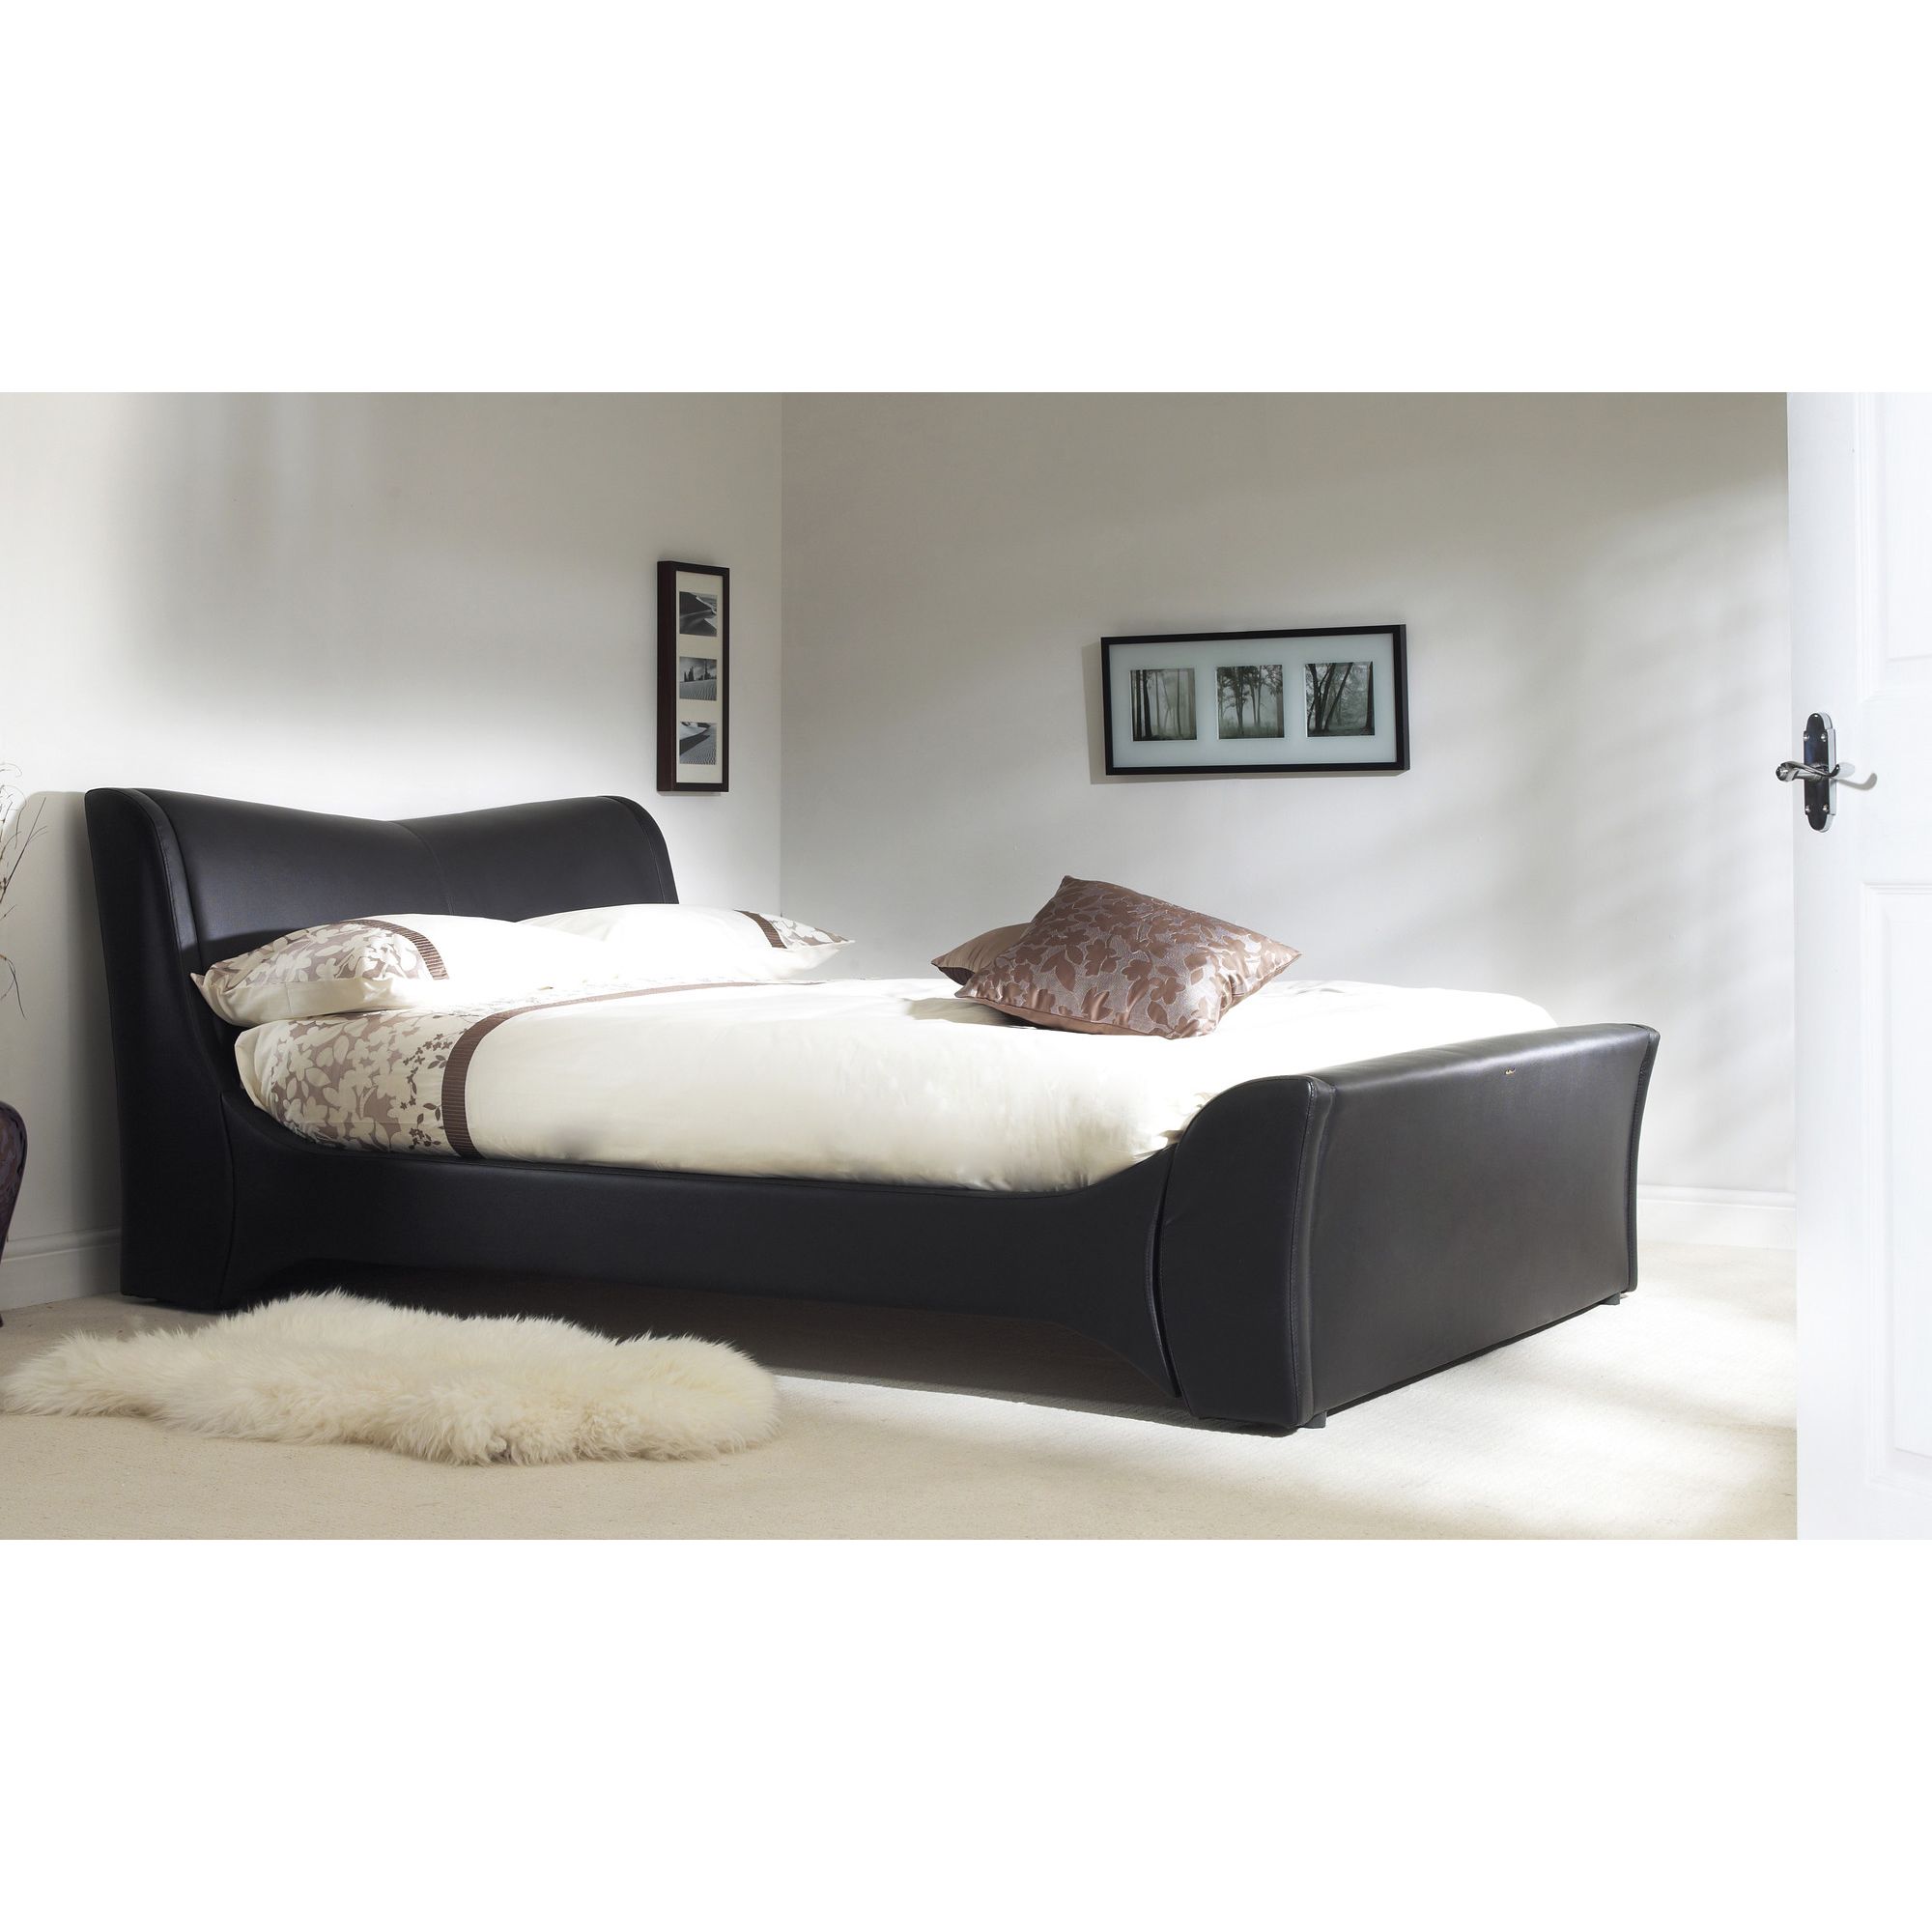 Frank Bosworth Veneto Leather Bed - Black - King at Tescos Direct